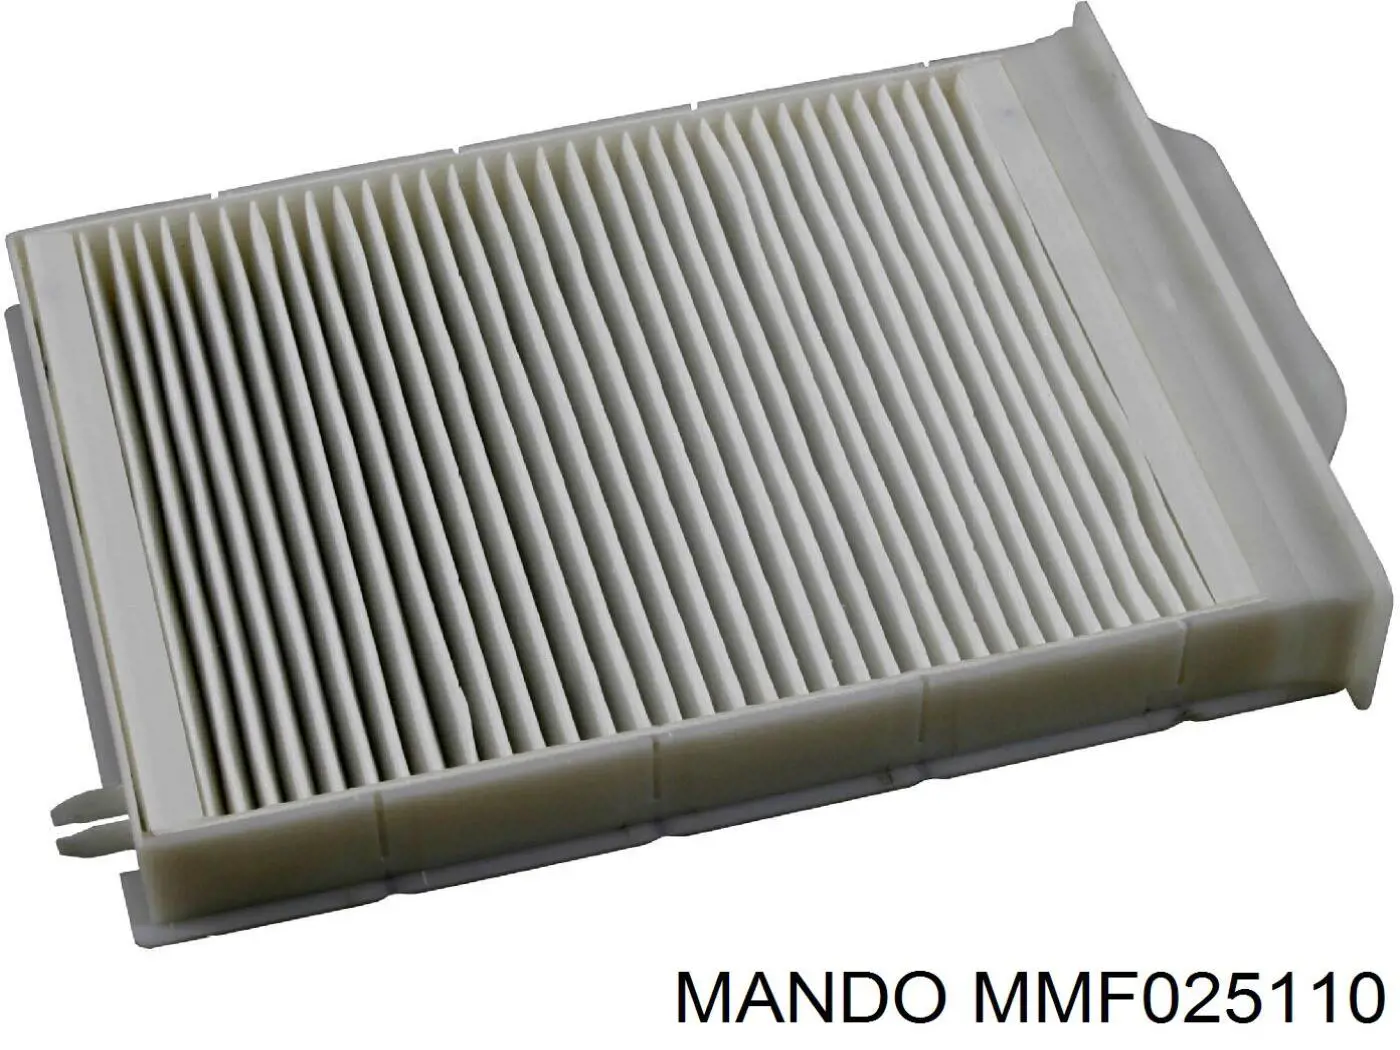 MMF025110 Mando фільтр салону